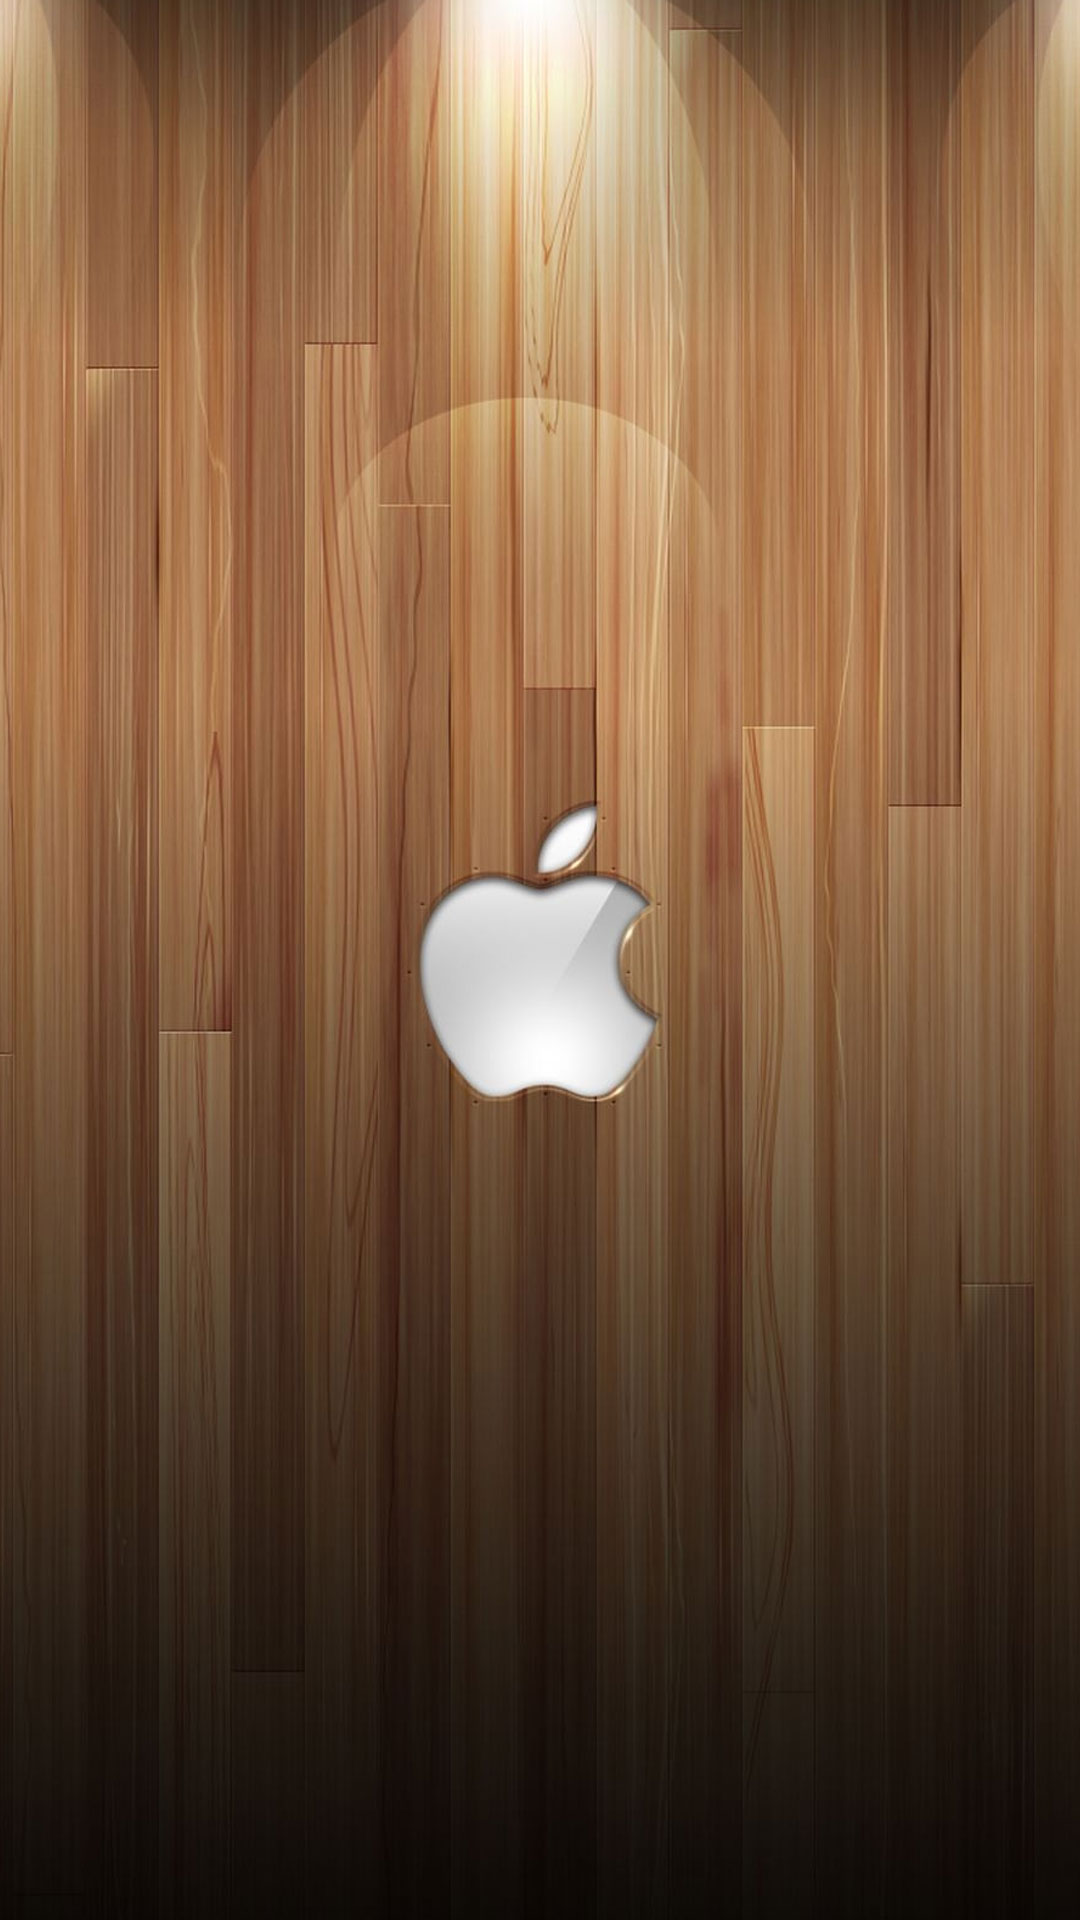 Uploads Beautiful Apple iPhone Plus Wallpaper Retina1 Jpg